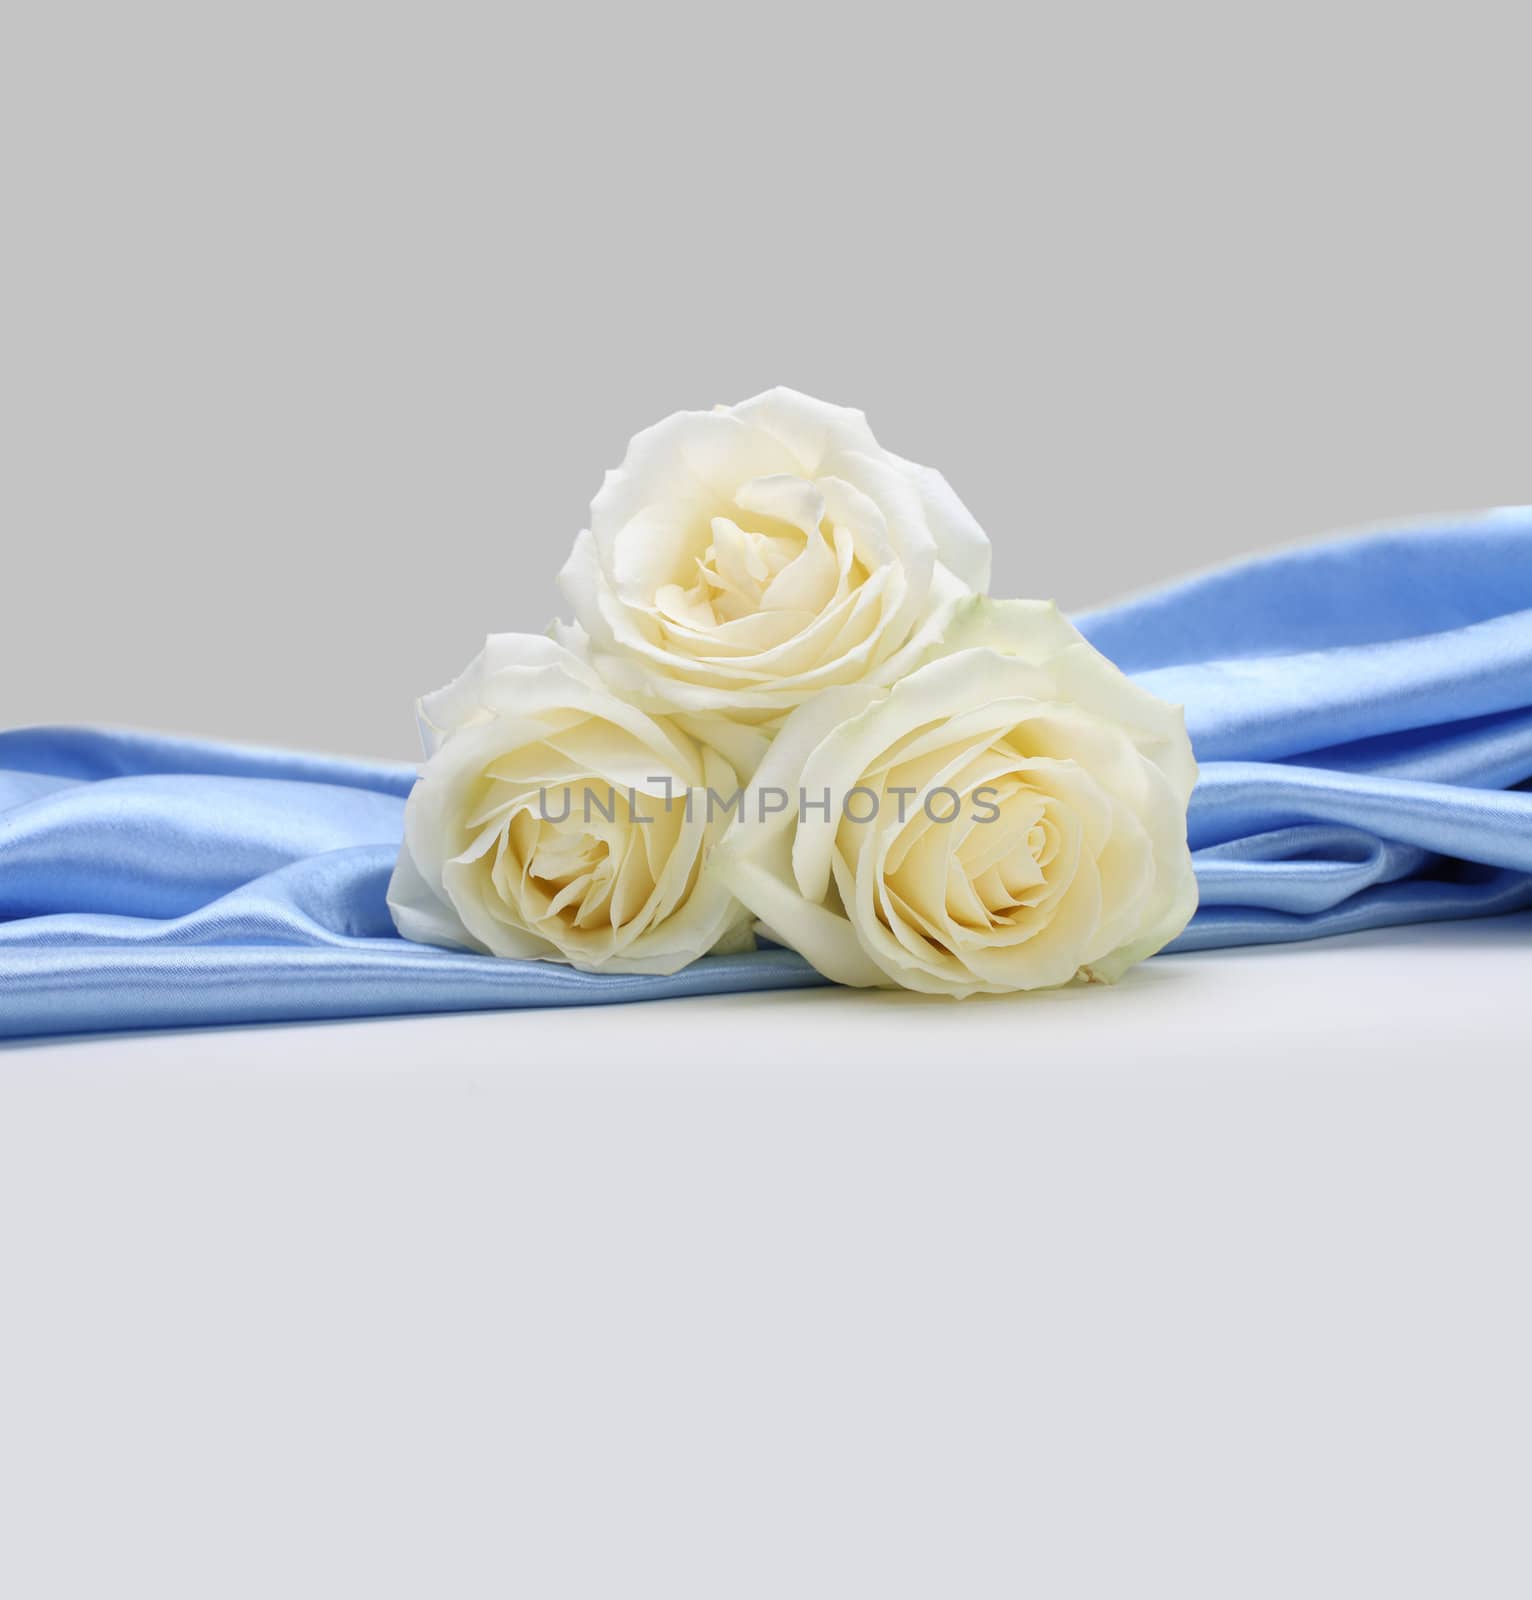 roses on silk background by rudchenko